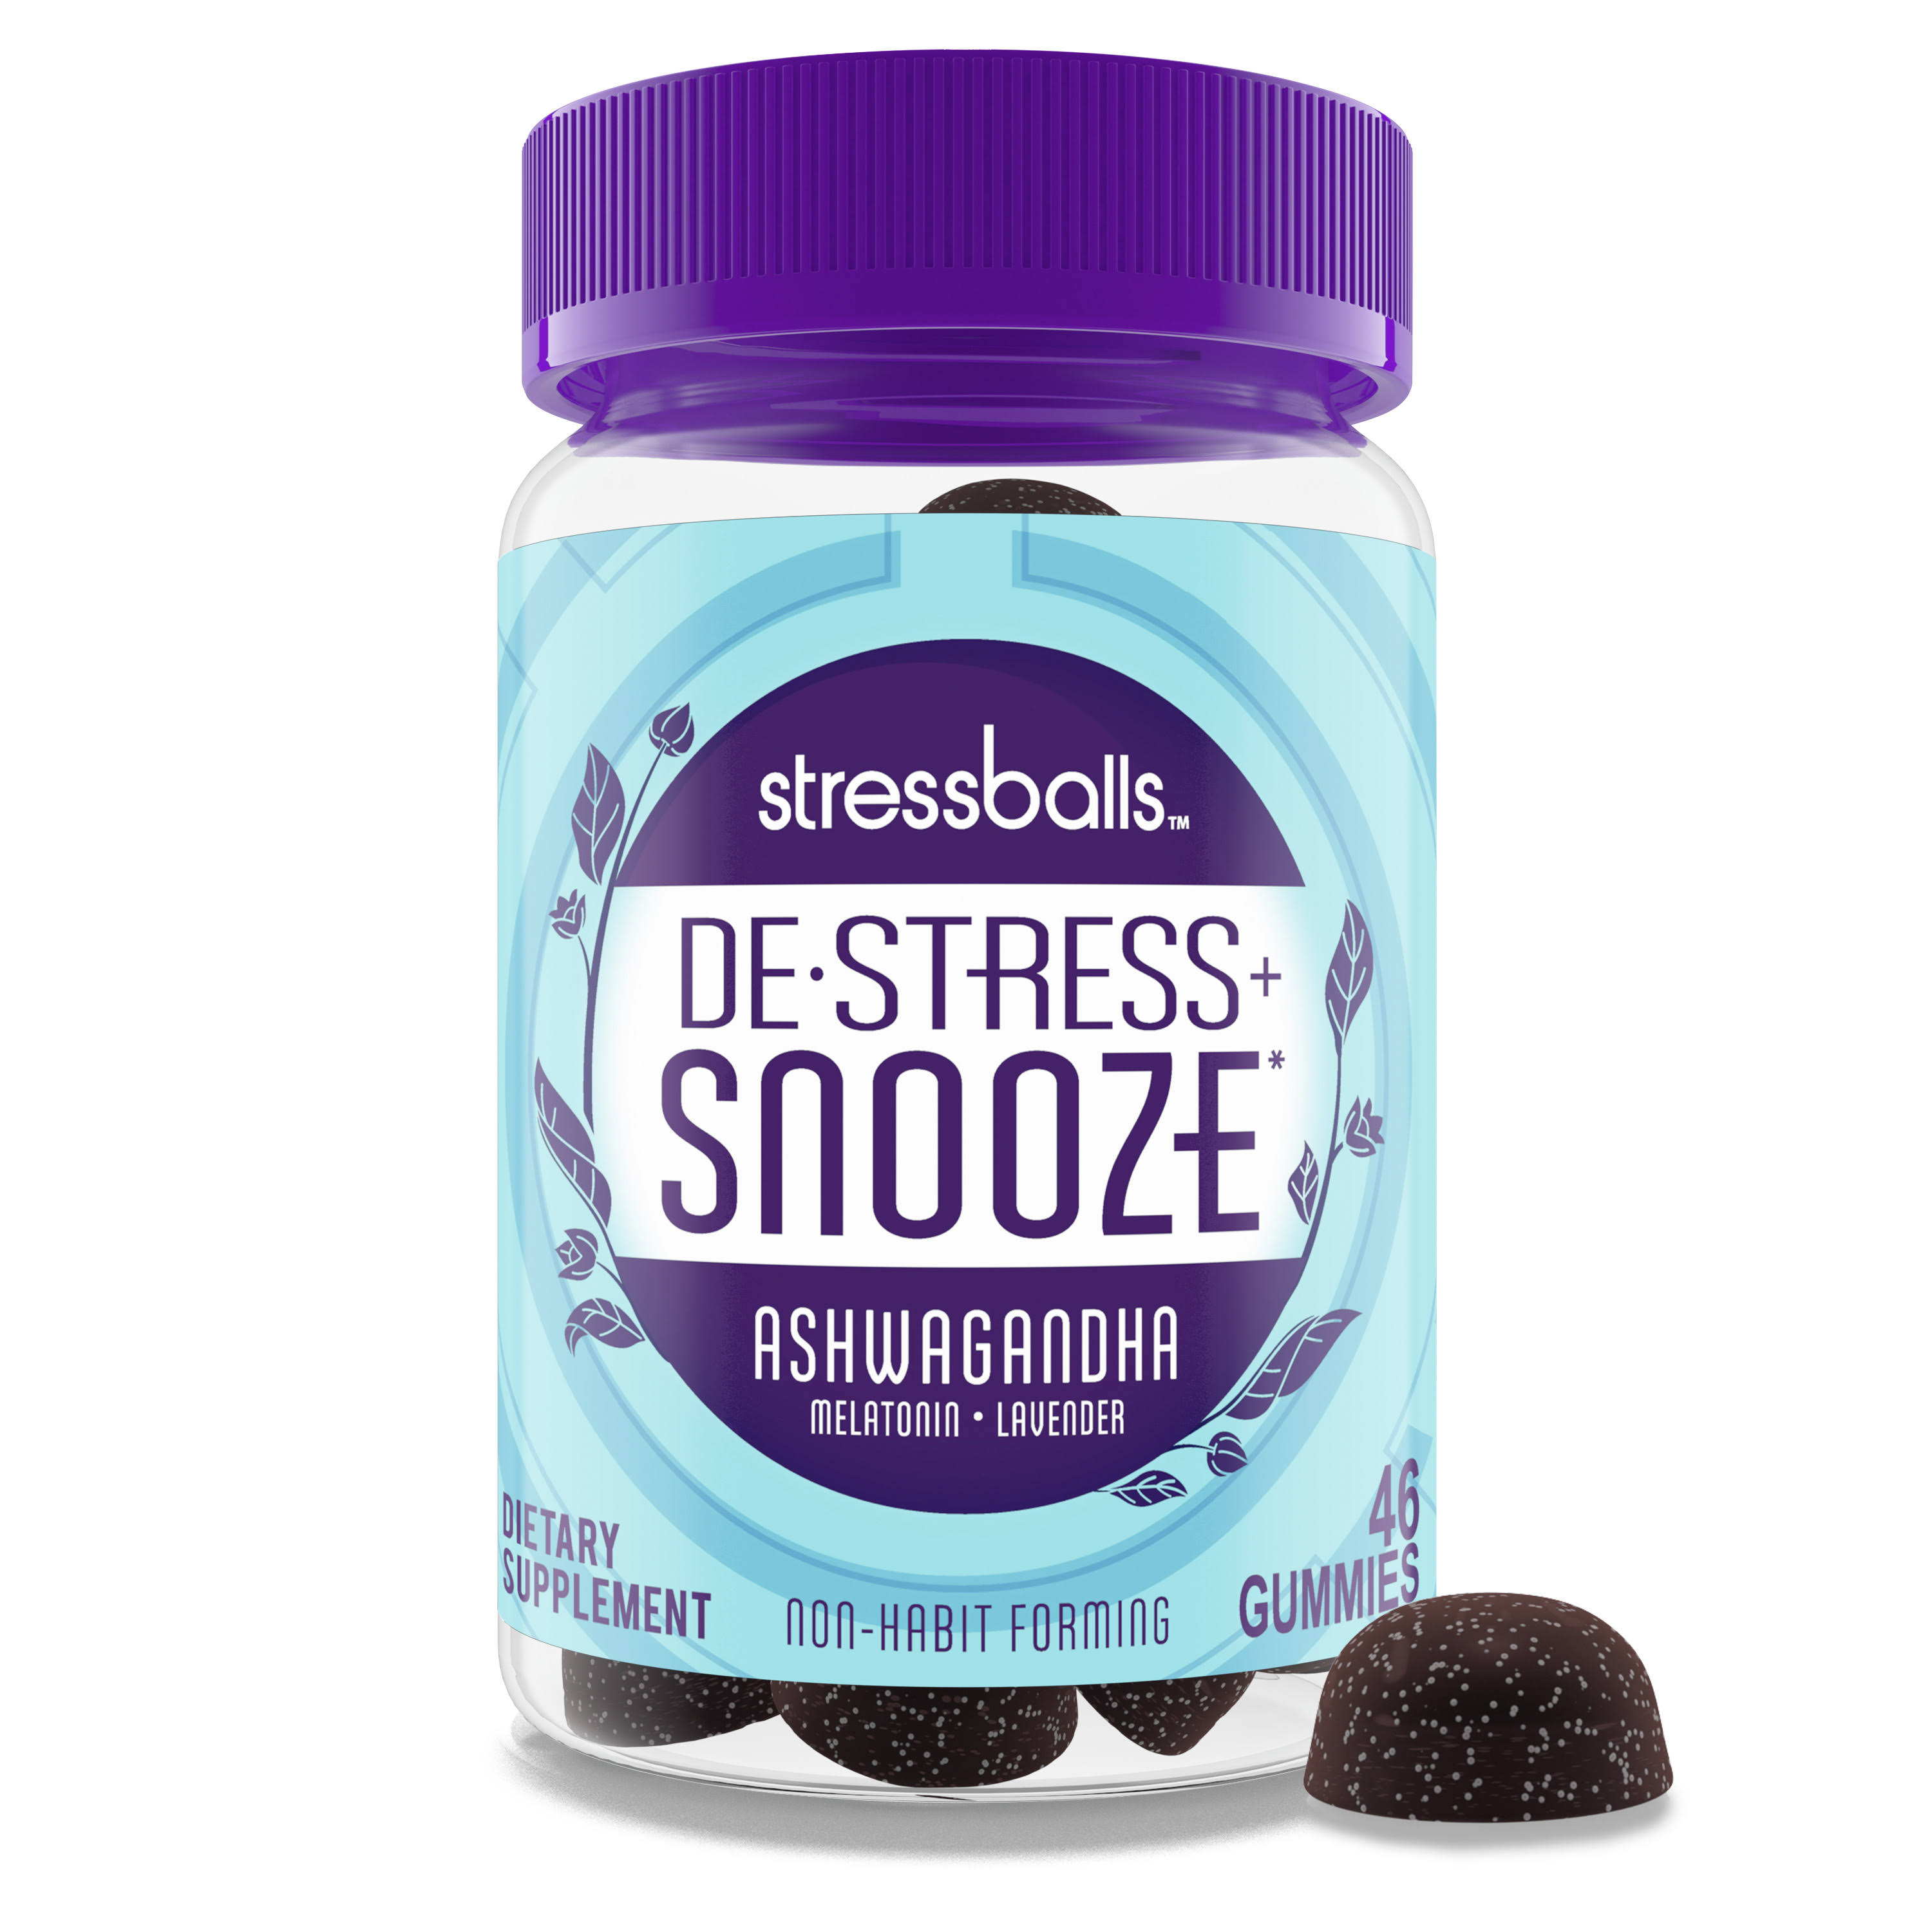 Stressballs De-Stress + Snooze, Gummies, Ashwagandha - 46 gummies